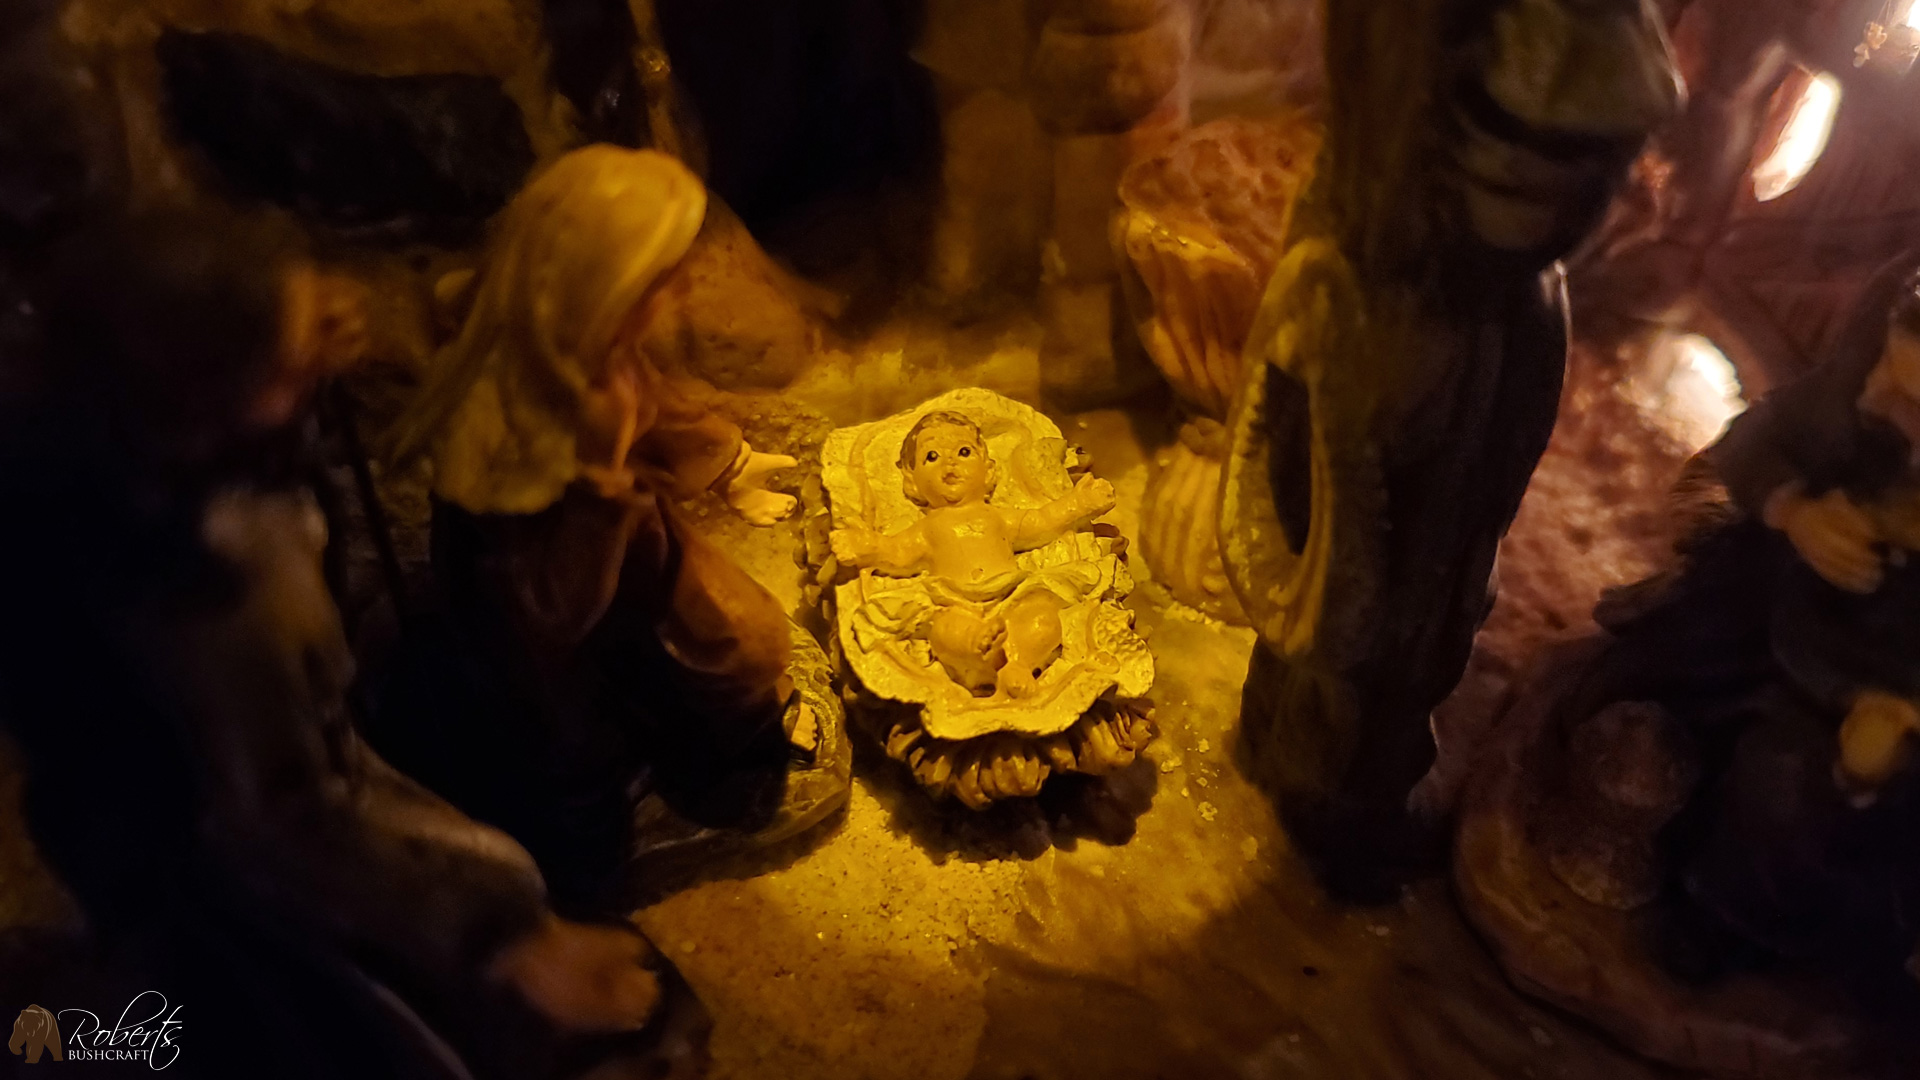 My Nativity scene birth of Jesus Christ - Merry Christmas